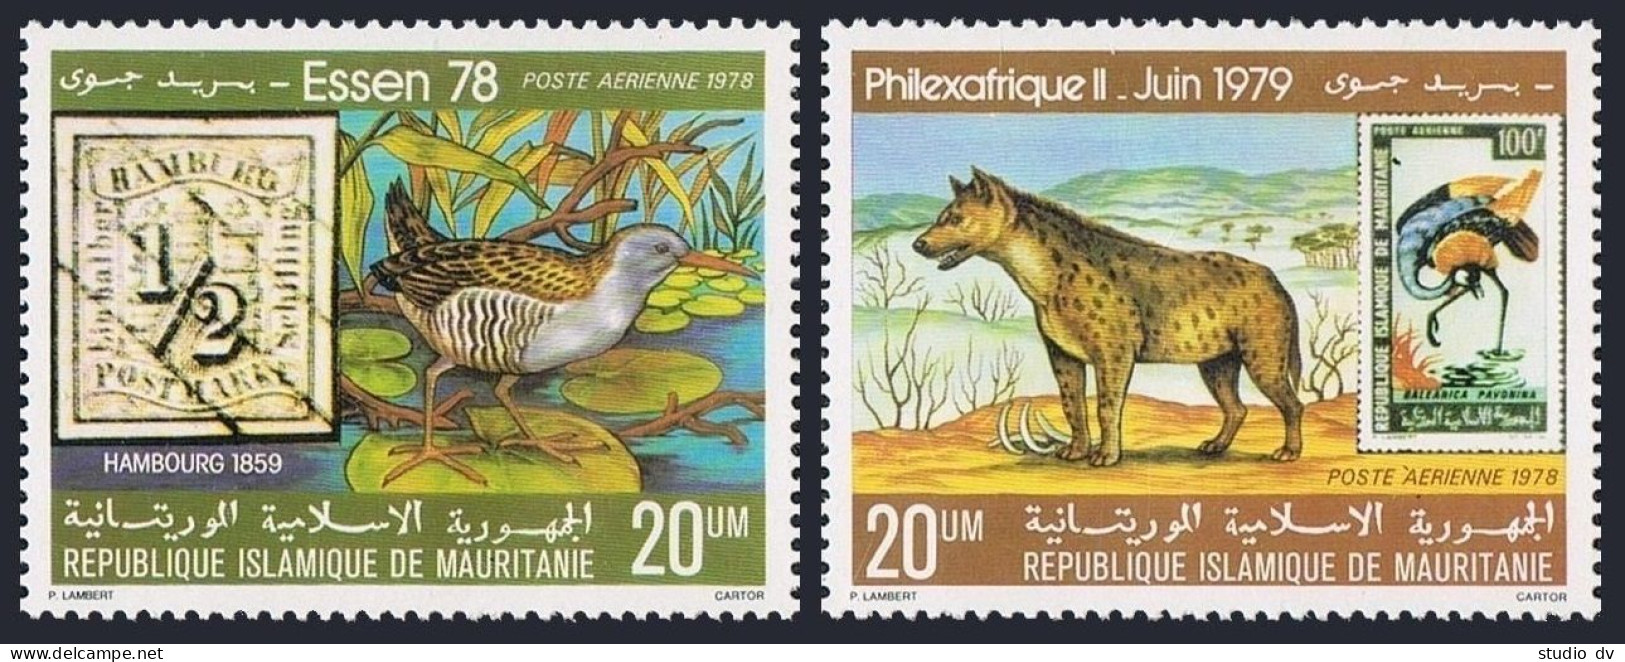 Mauritania C185-C186, MNH. Michel 613-614. ESSEN-1978. Hyena, Wading Bird. - Mauritanie (1960-...)